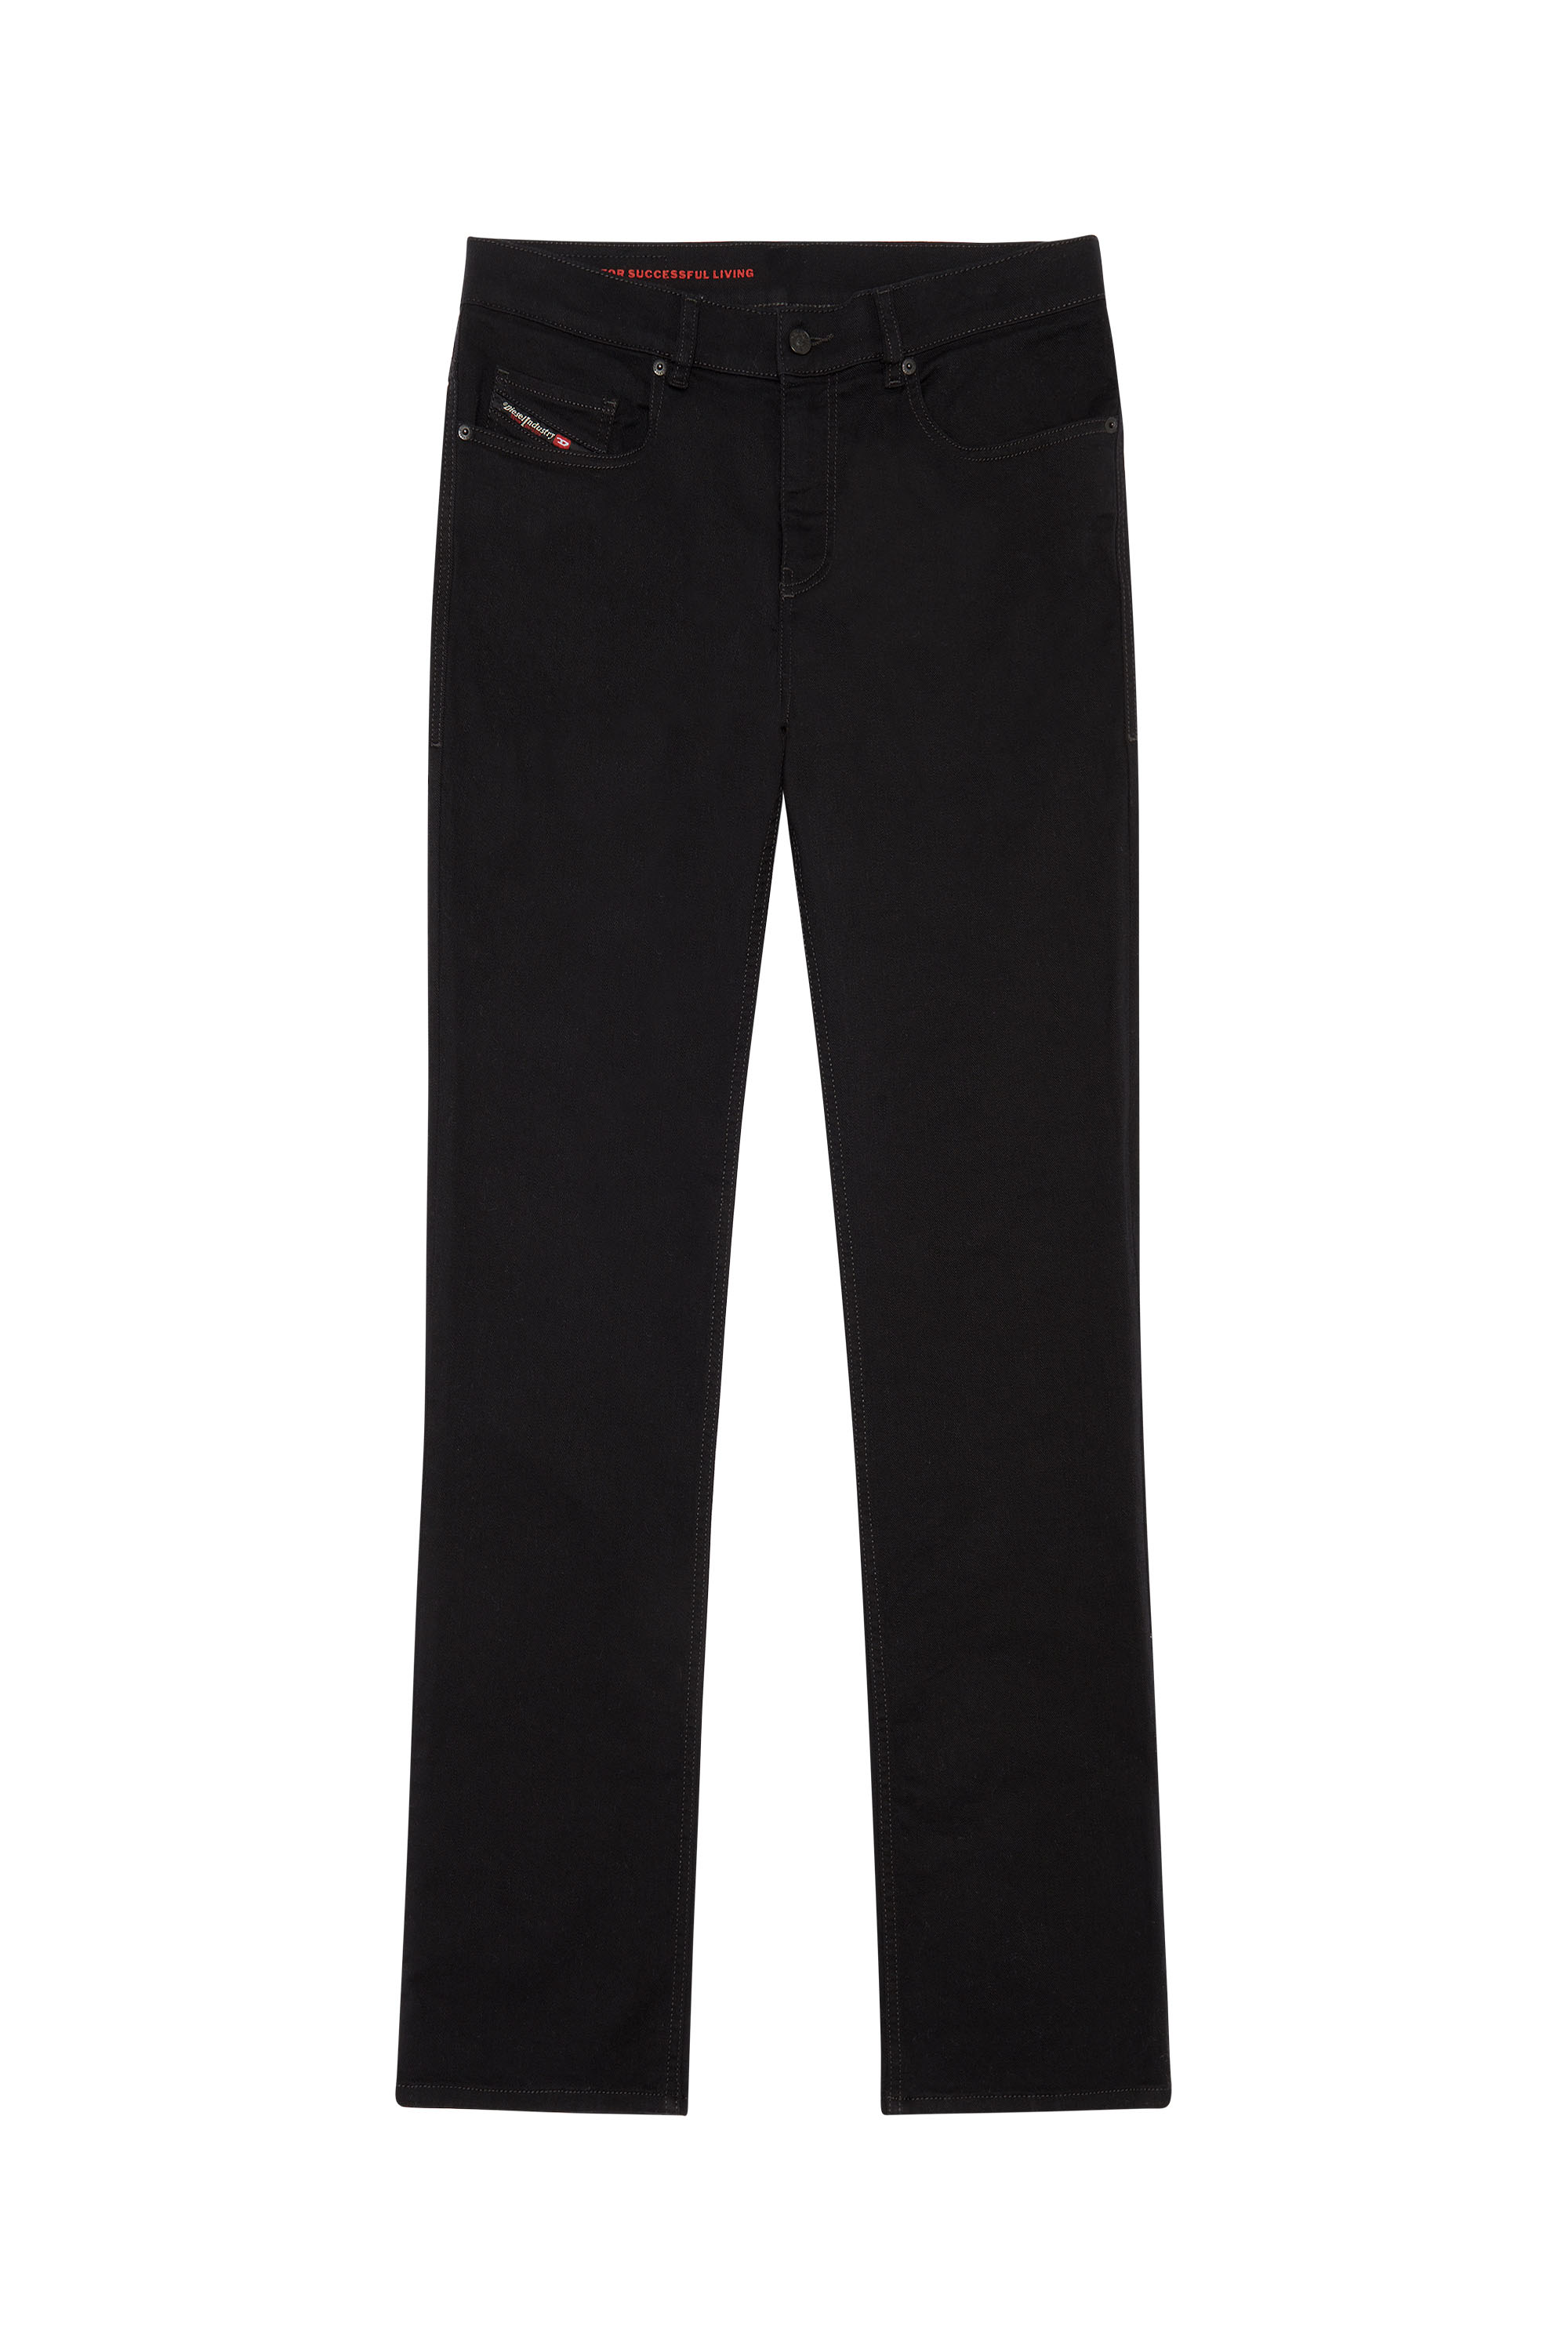 Bootcut Jeans 2021 D-Vocs 069YP, Black/Dark grey - Jeans